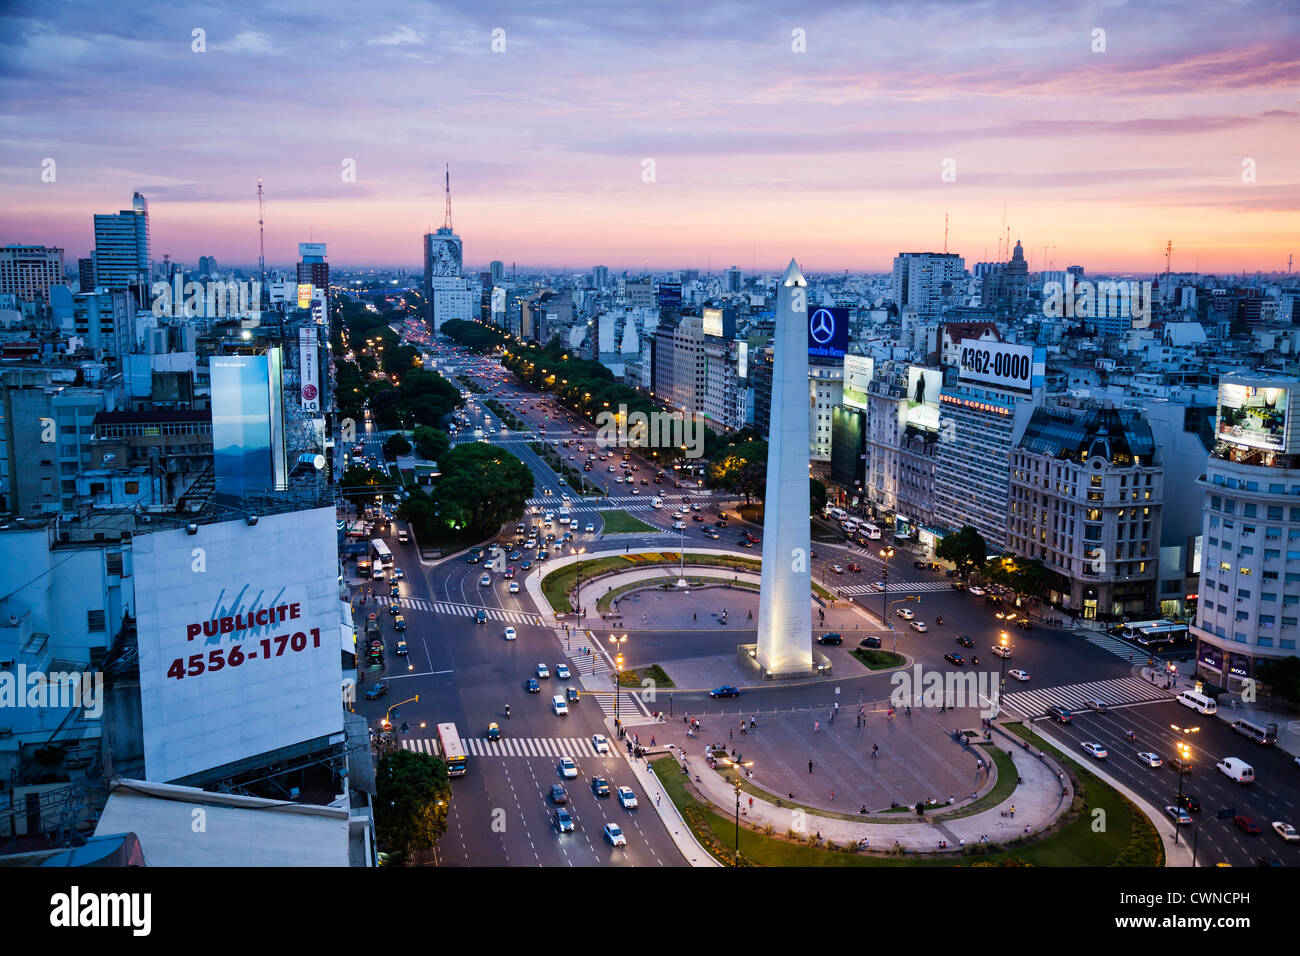 View over Avenida 9 Julio and the obelisk in Plaza Republica, Buenos Aires, Argentina. Stock Photo